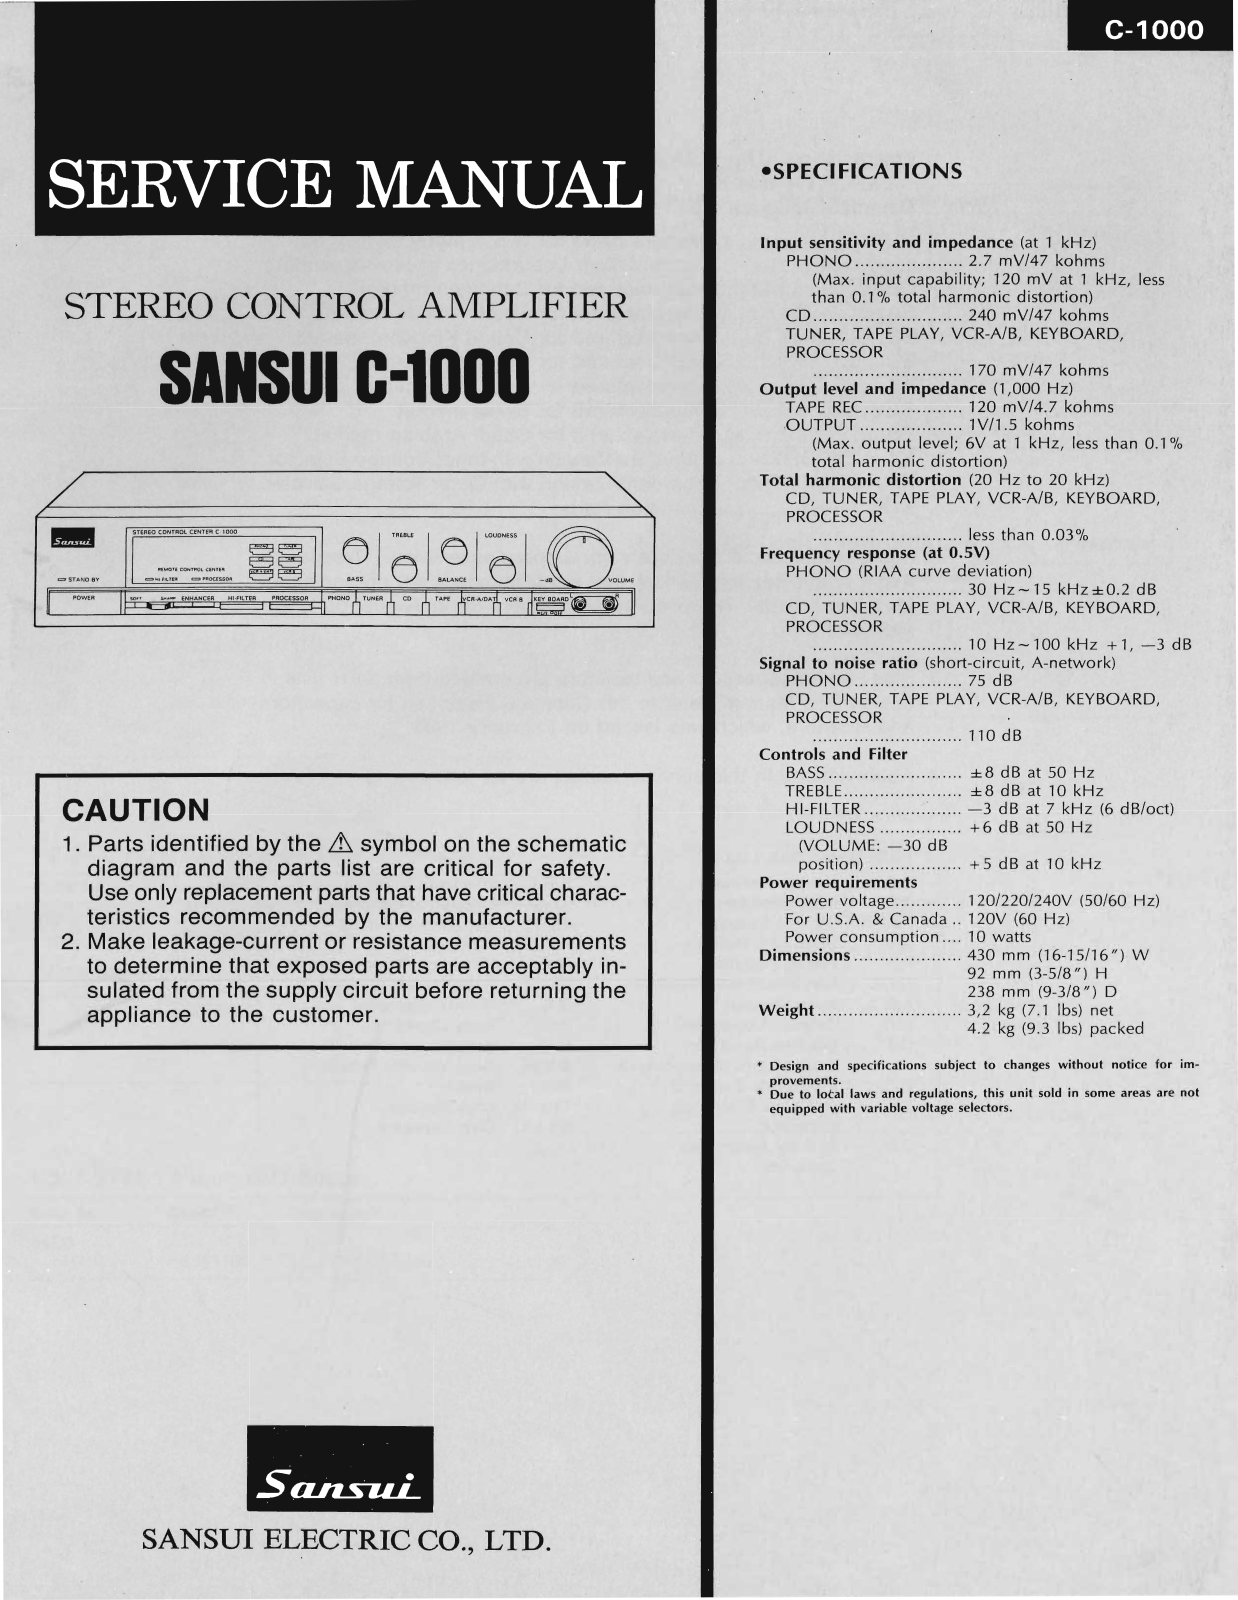 Sansui C-1000 Service Manual